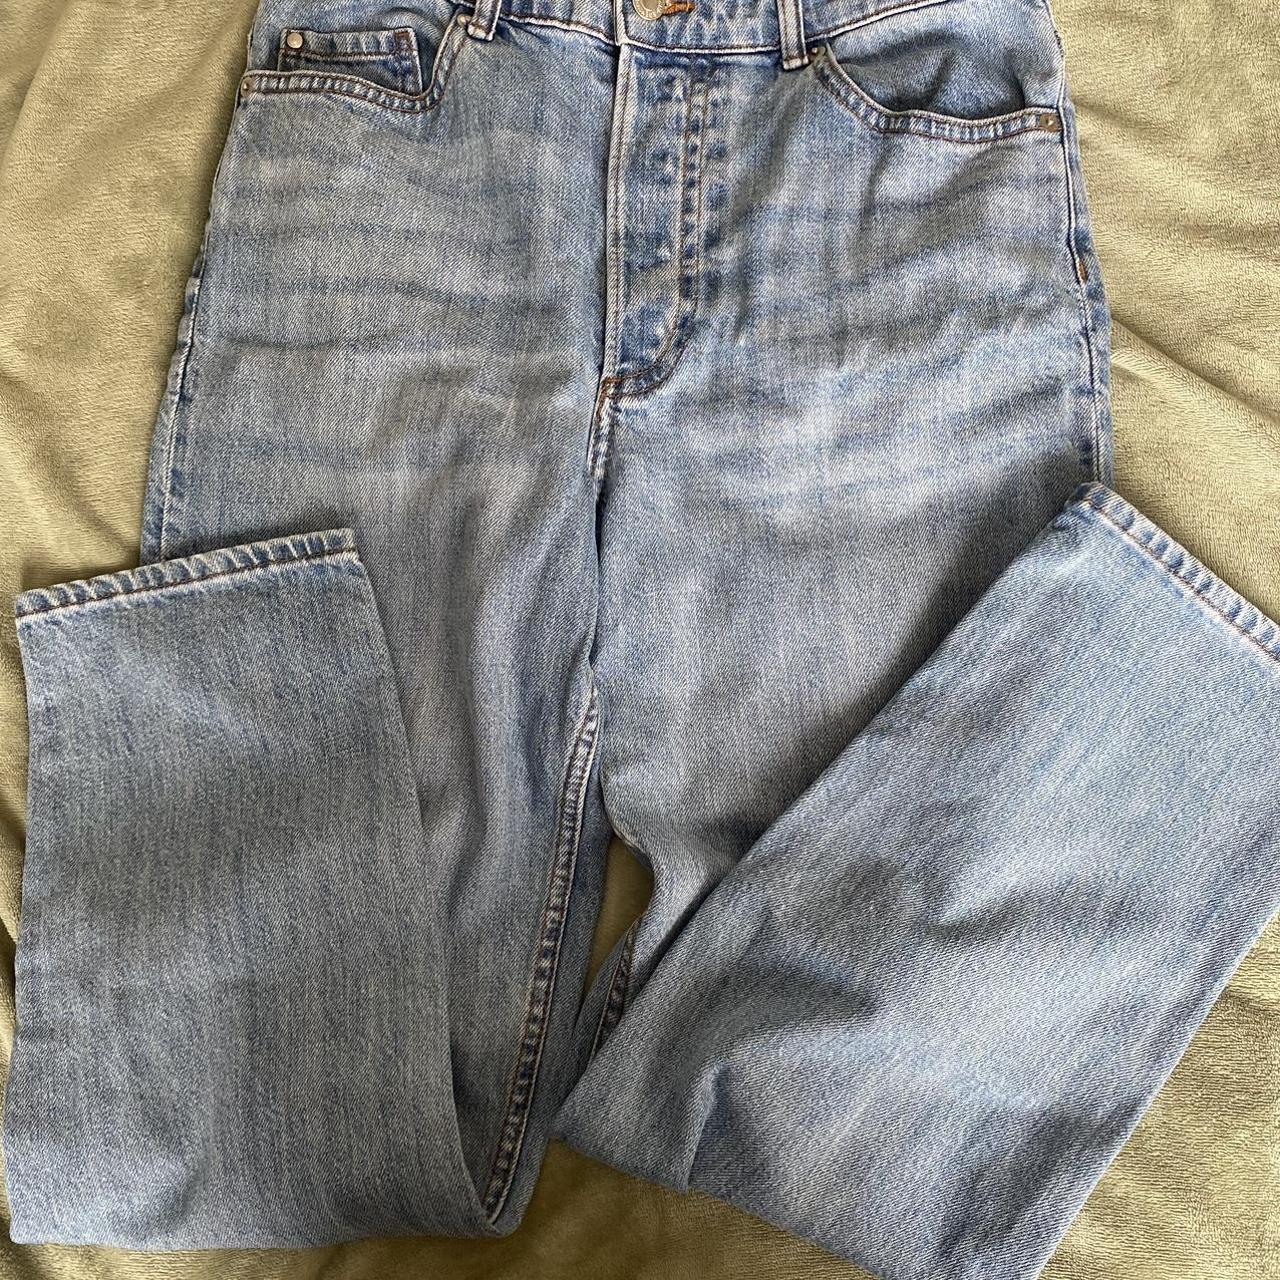 H&m mom jeans Straight leg style - Depop